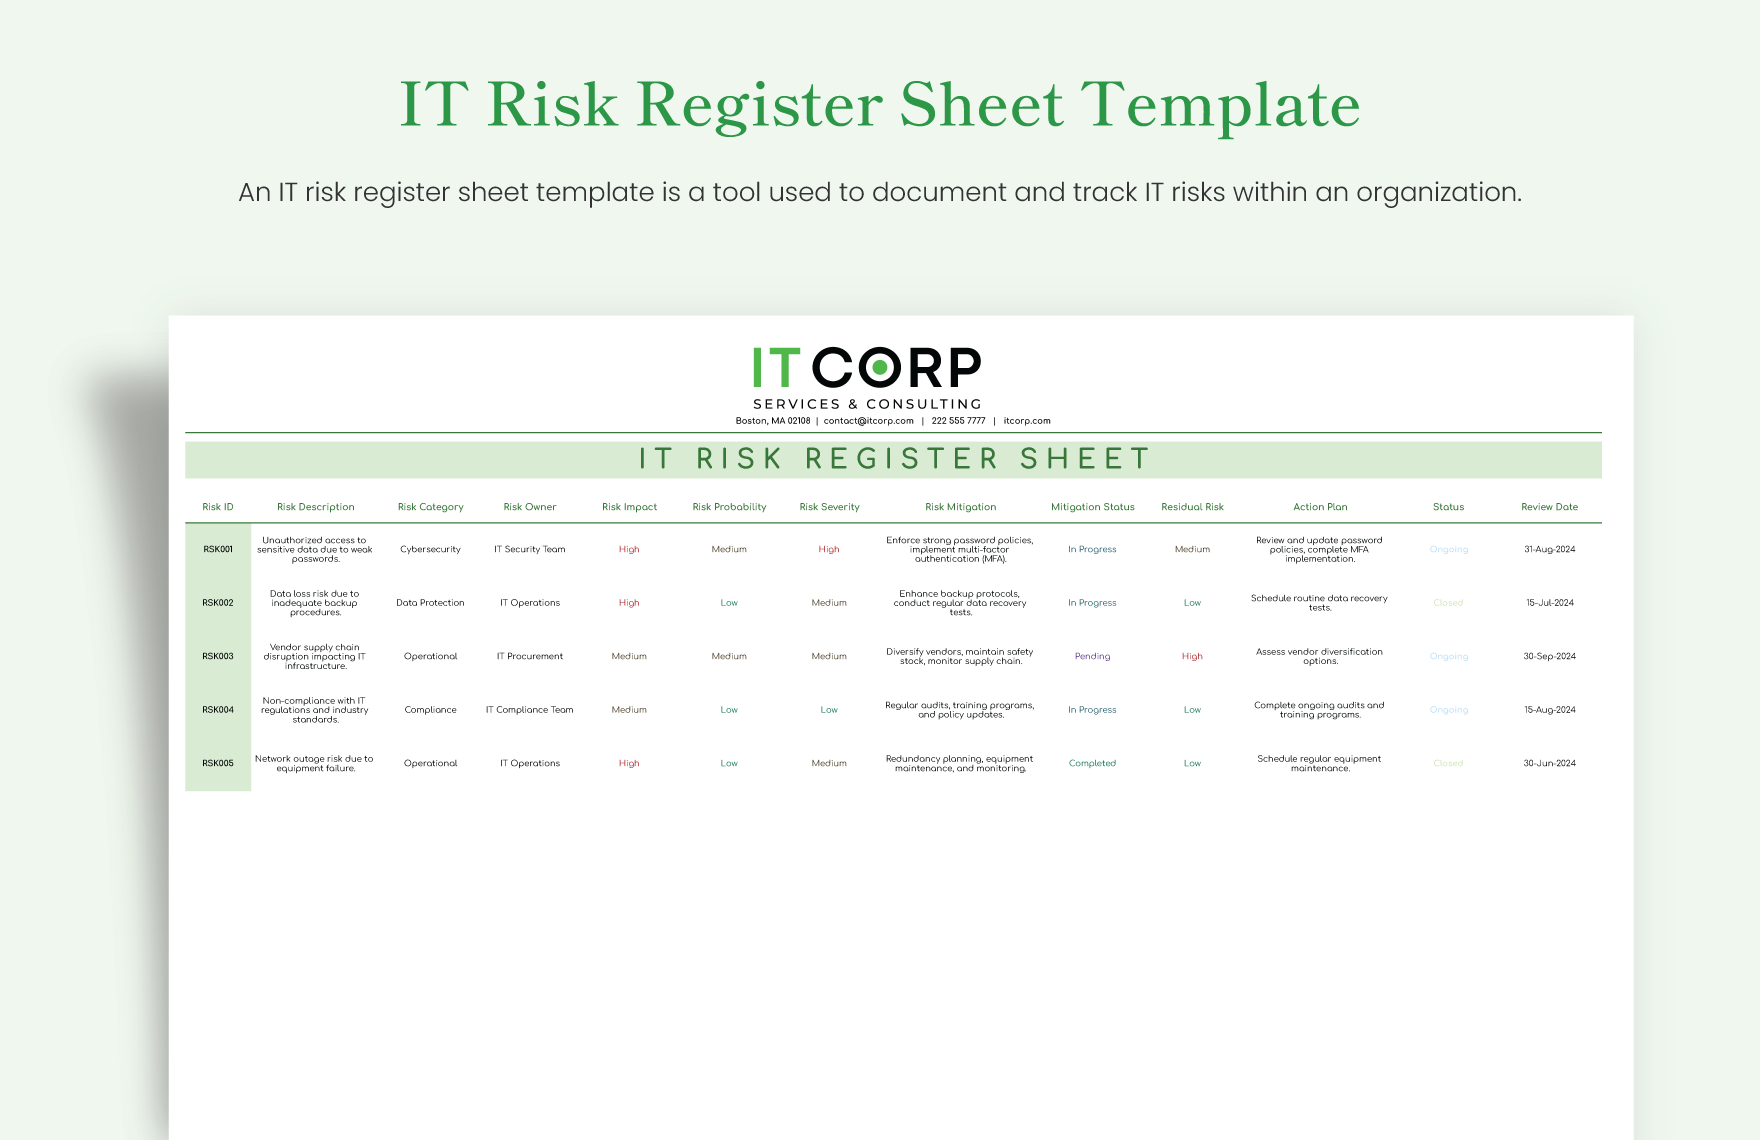 IT Risk Register Sheet Template in Excel, Google Sheets